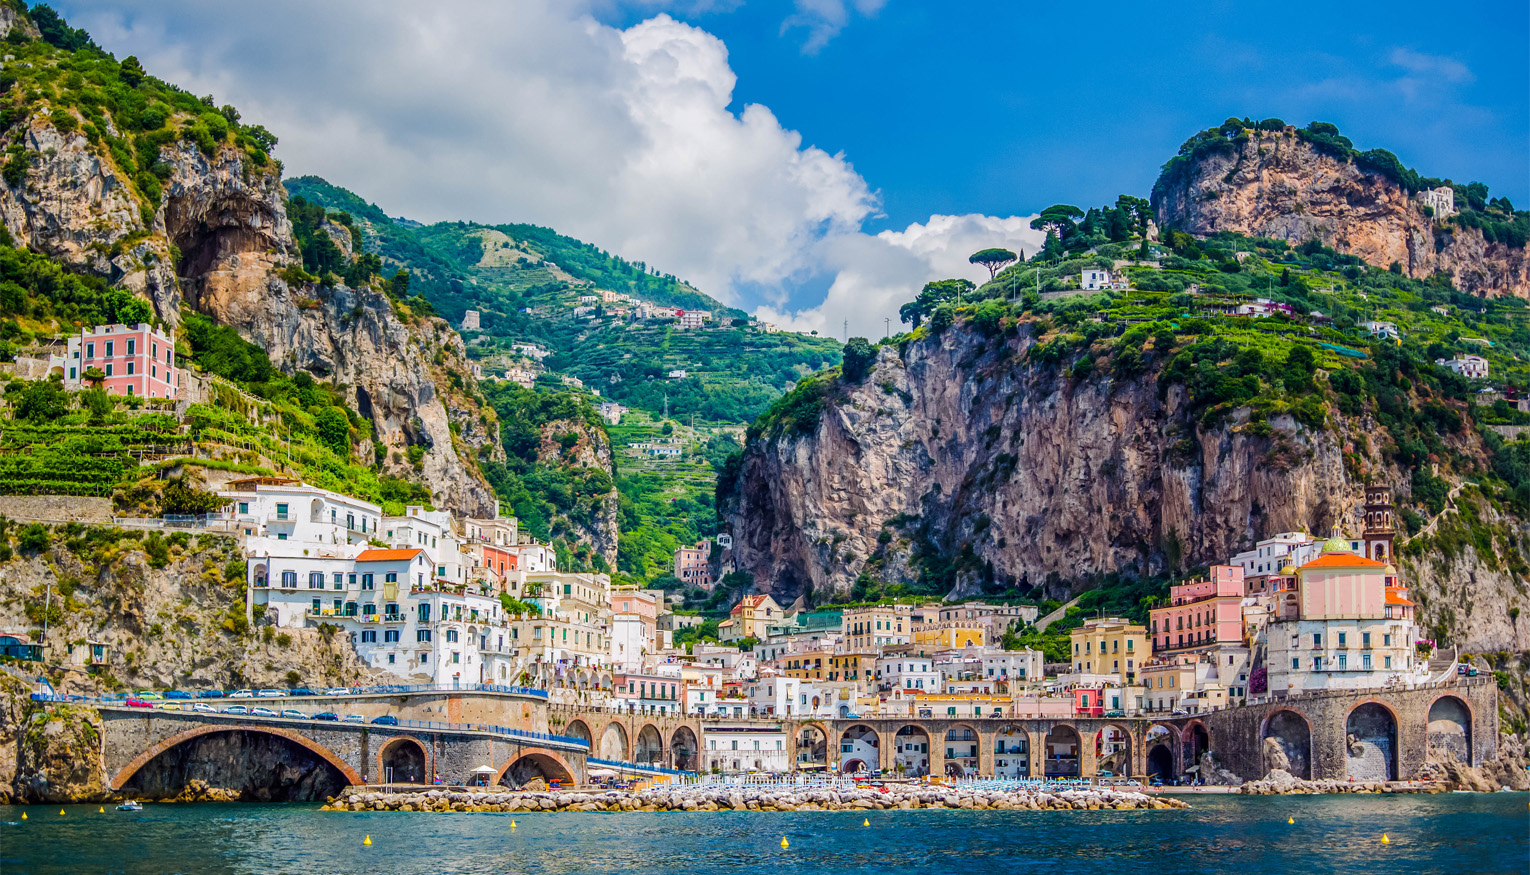 The Breathtaking Amalfi Coast!